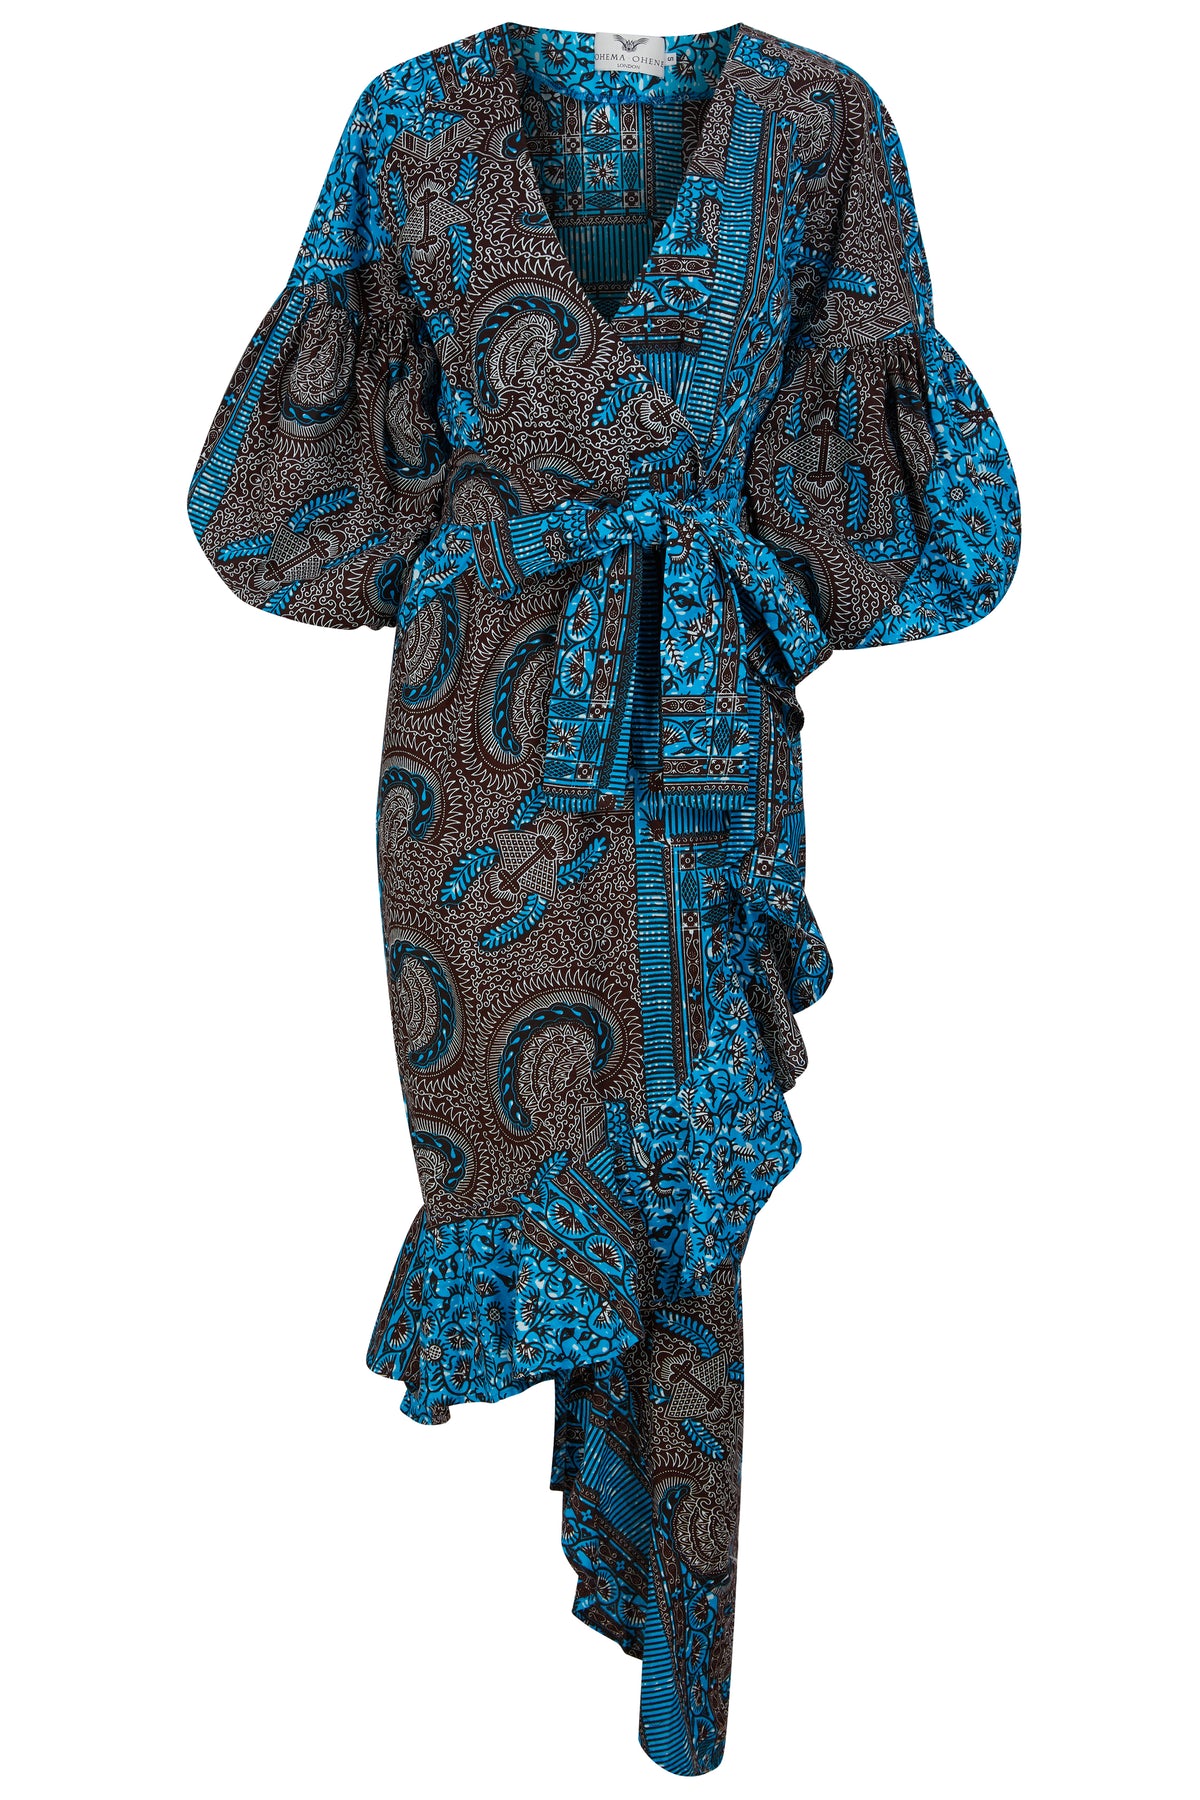 Bandana dress African print